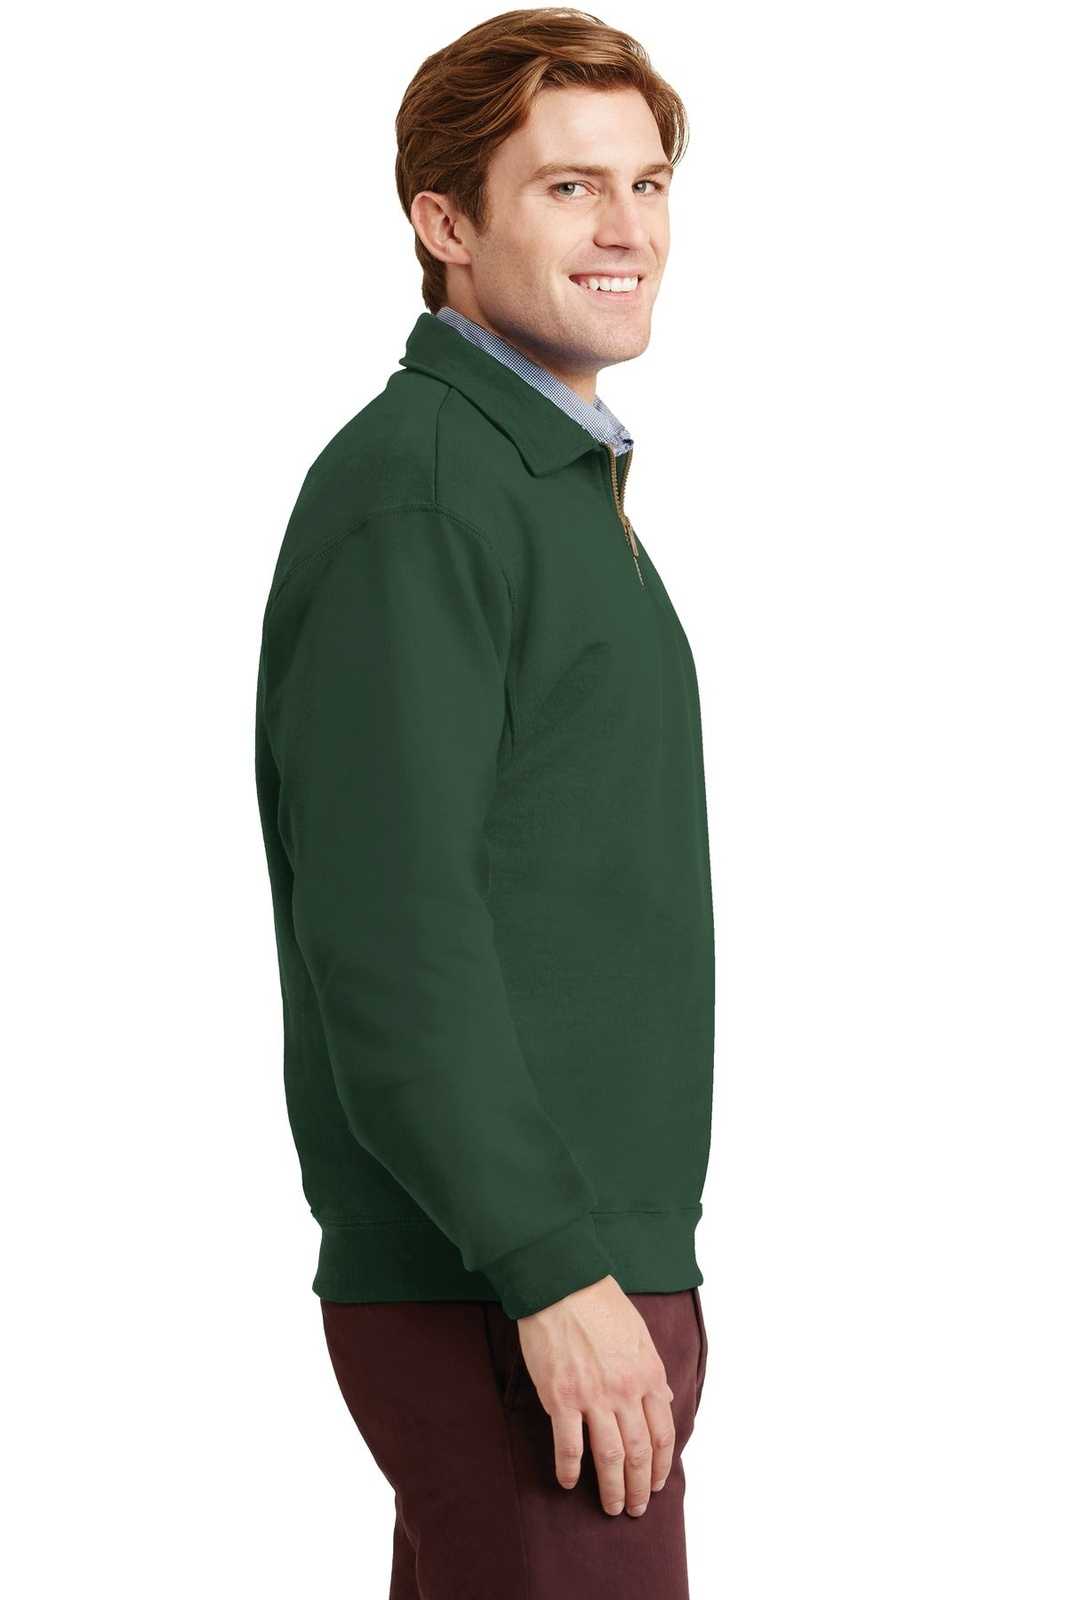 Jerzees 4528M Super Sweats Nublend 1/4-Zip Sweatshirt with Cadet Collar - Forest Green - HIT a Double